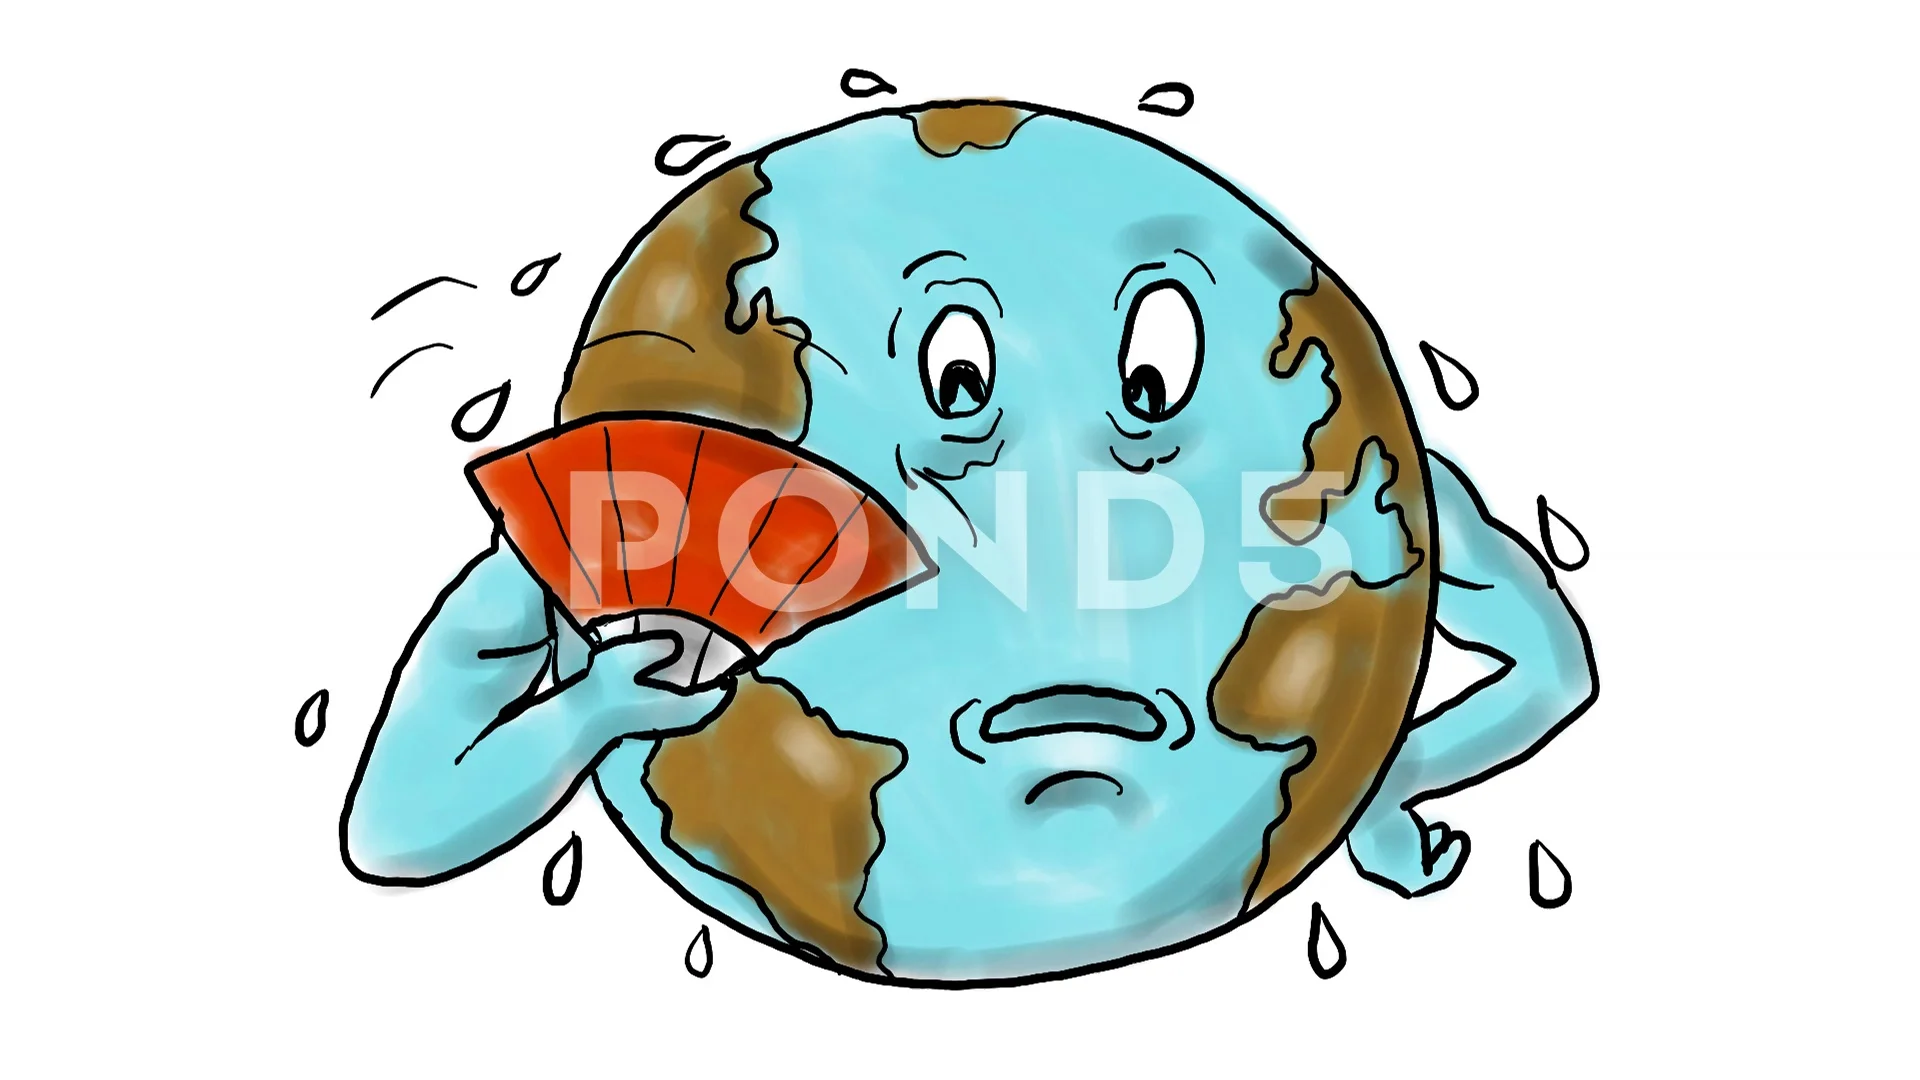 Melting earth globe suffering under global warming